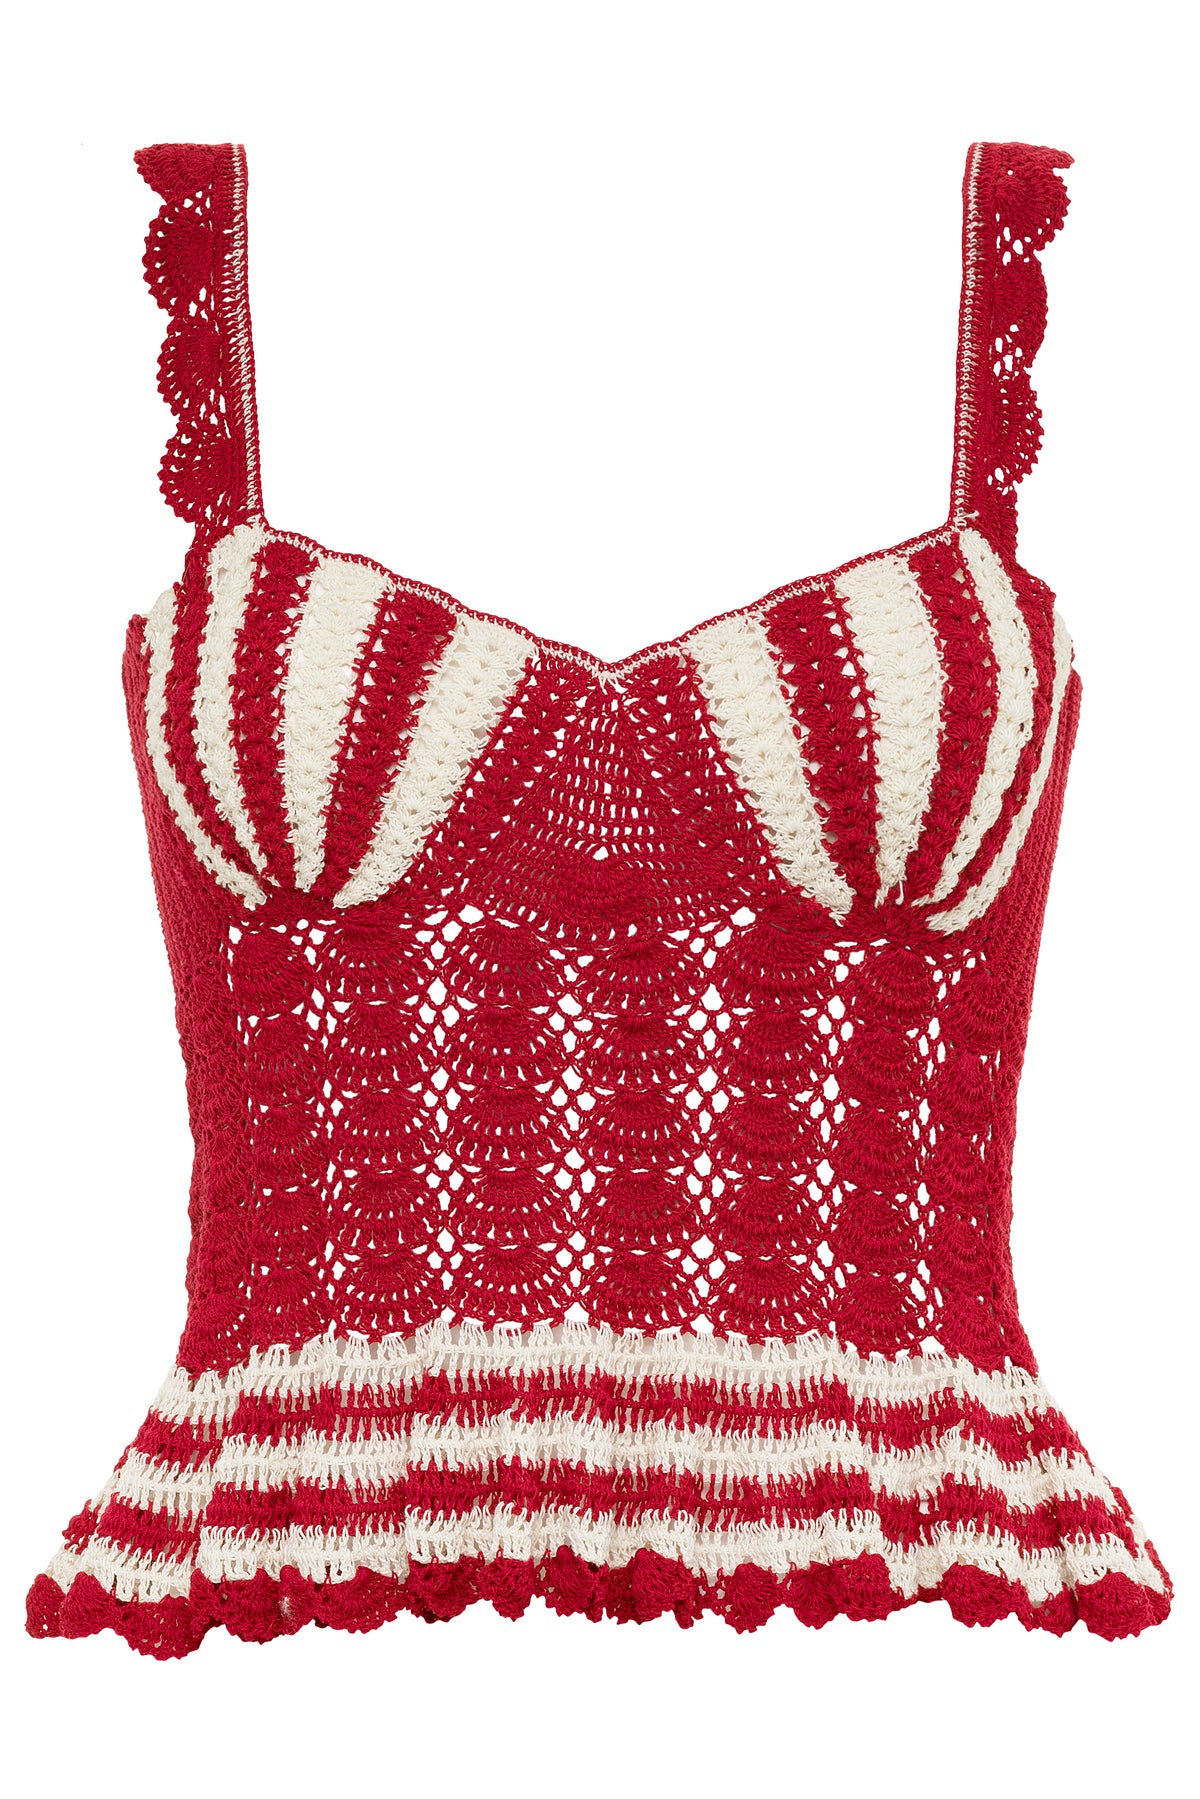 Shell Crochet Tank Top – Carolina K